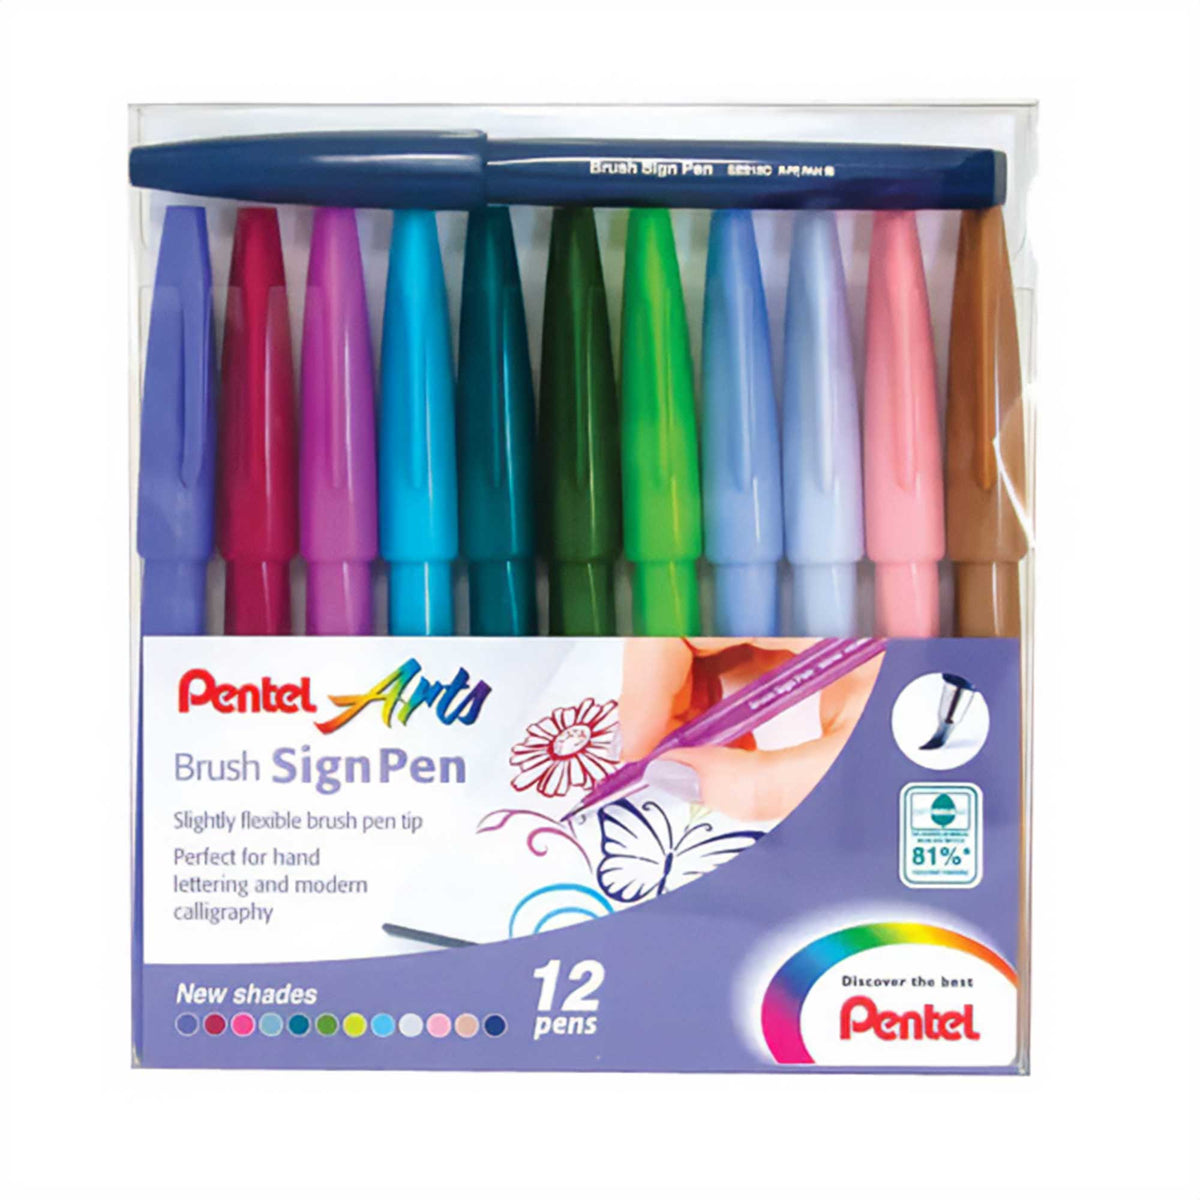 Pentel Arts Brush Sign Pen - New Pastel Shades